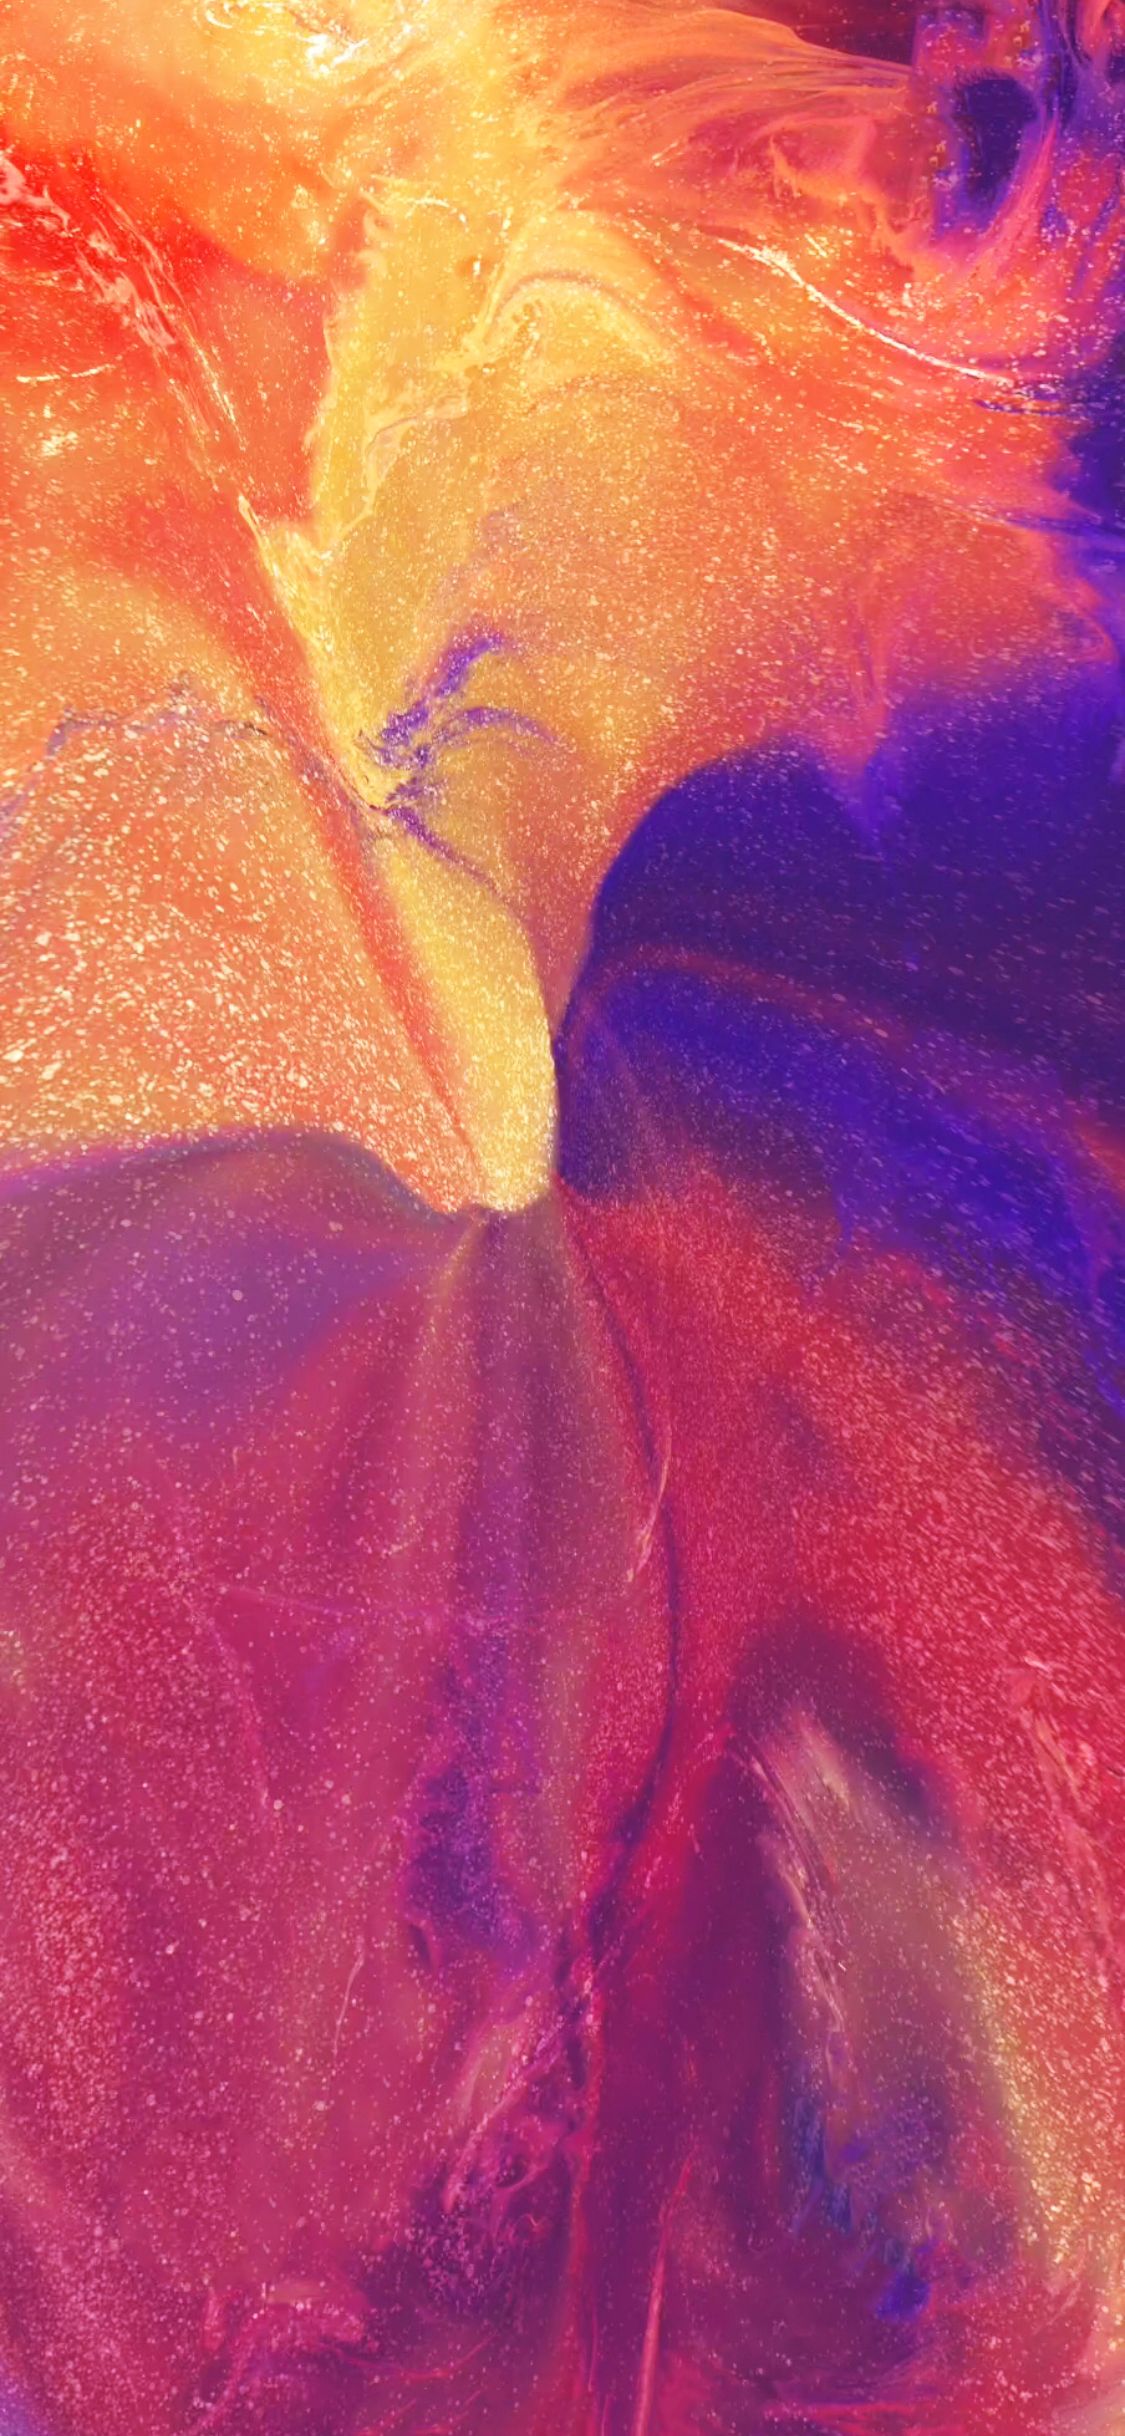 iPhone Color Wallpaper